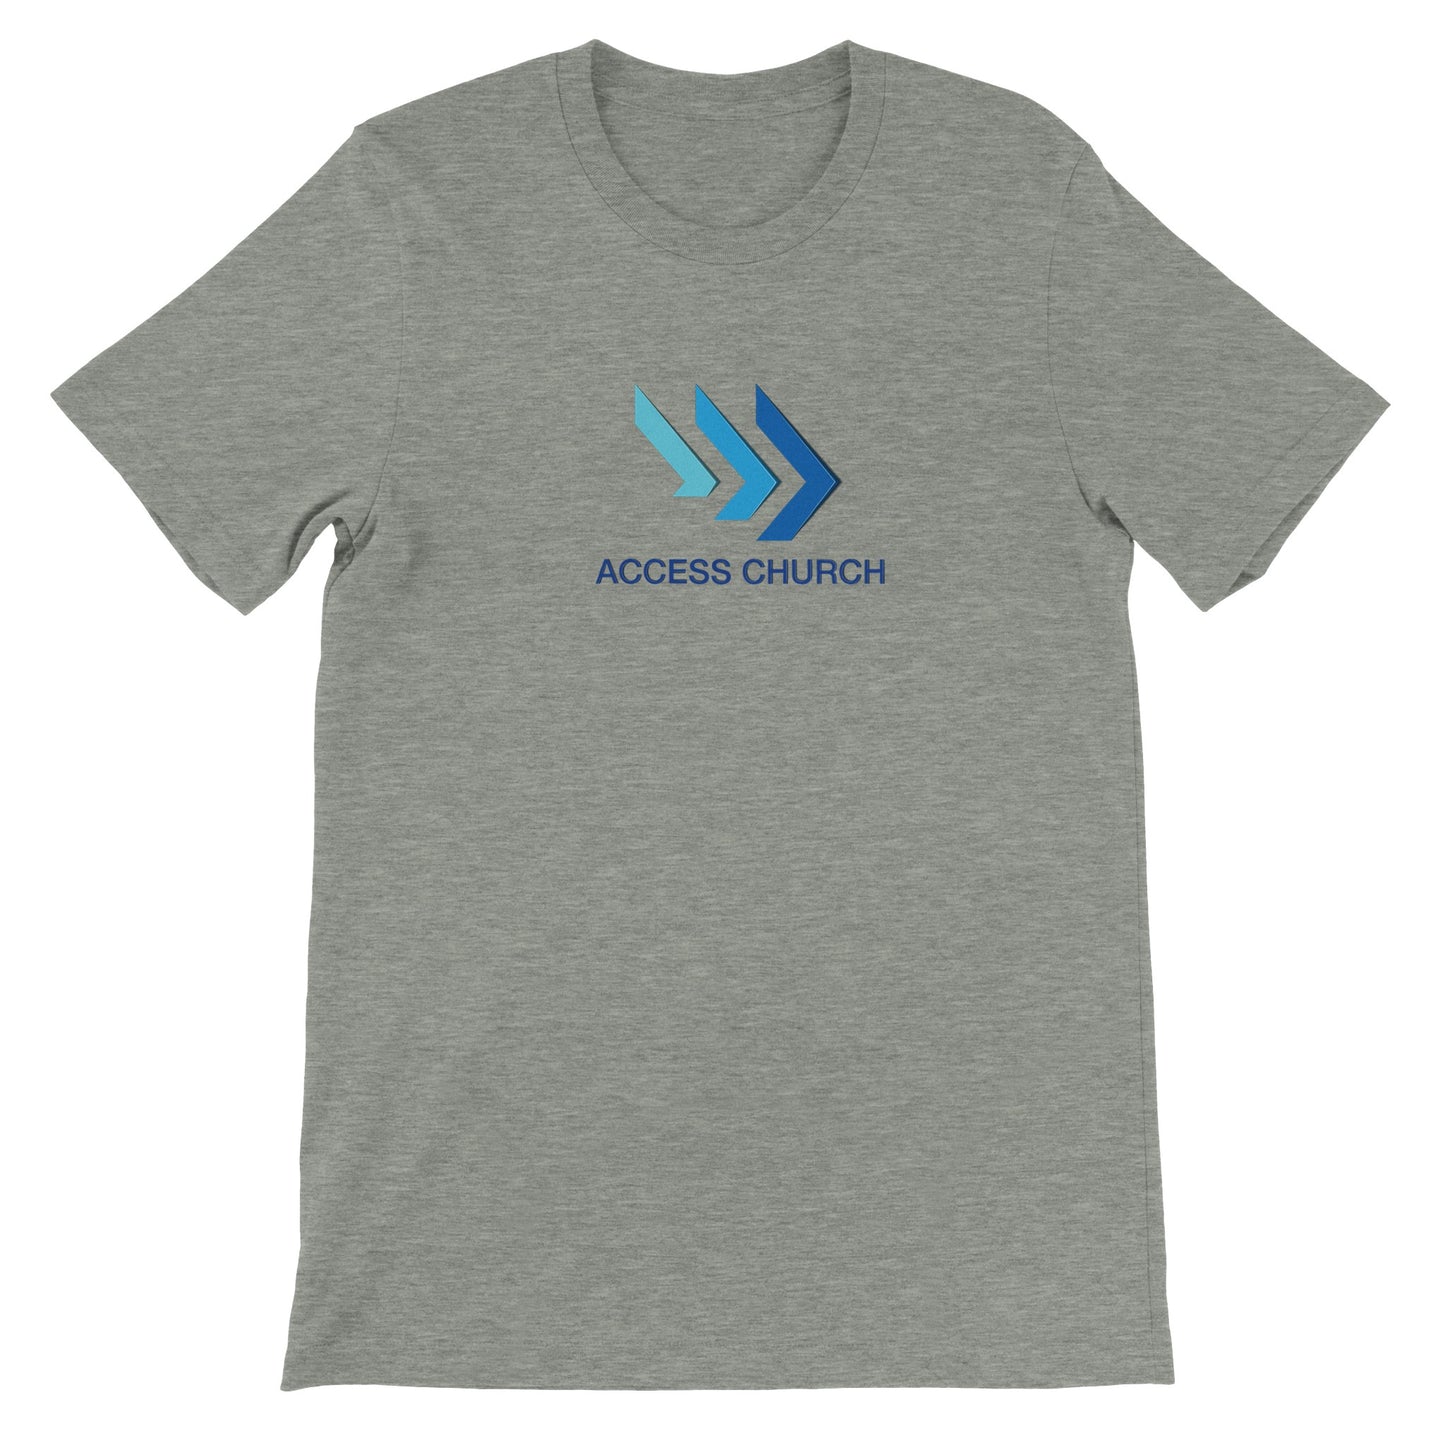 Access Church - Premium Unisex Crewneck T-shirt